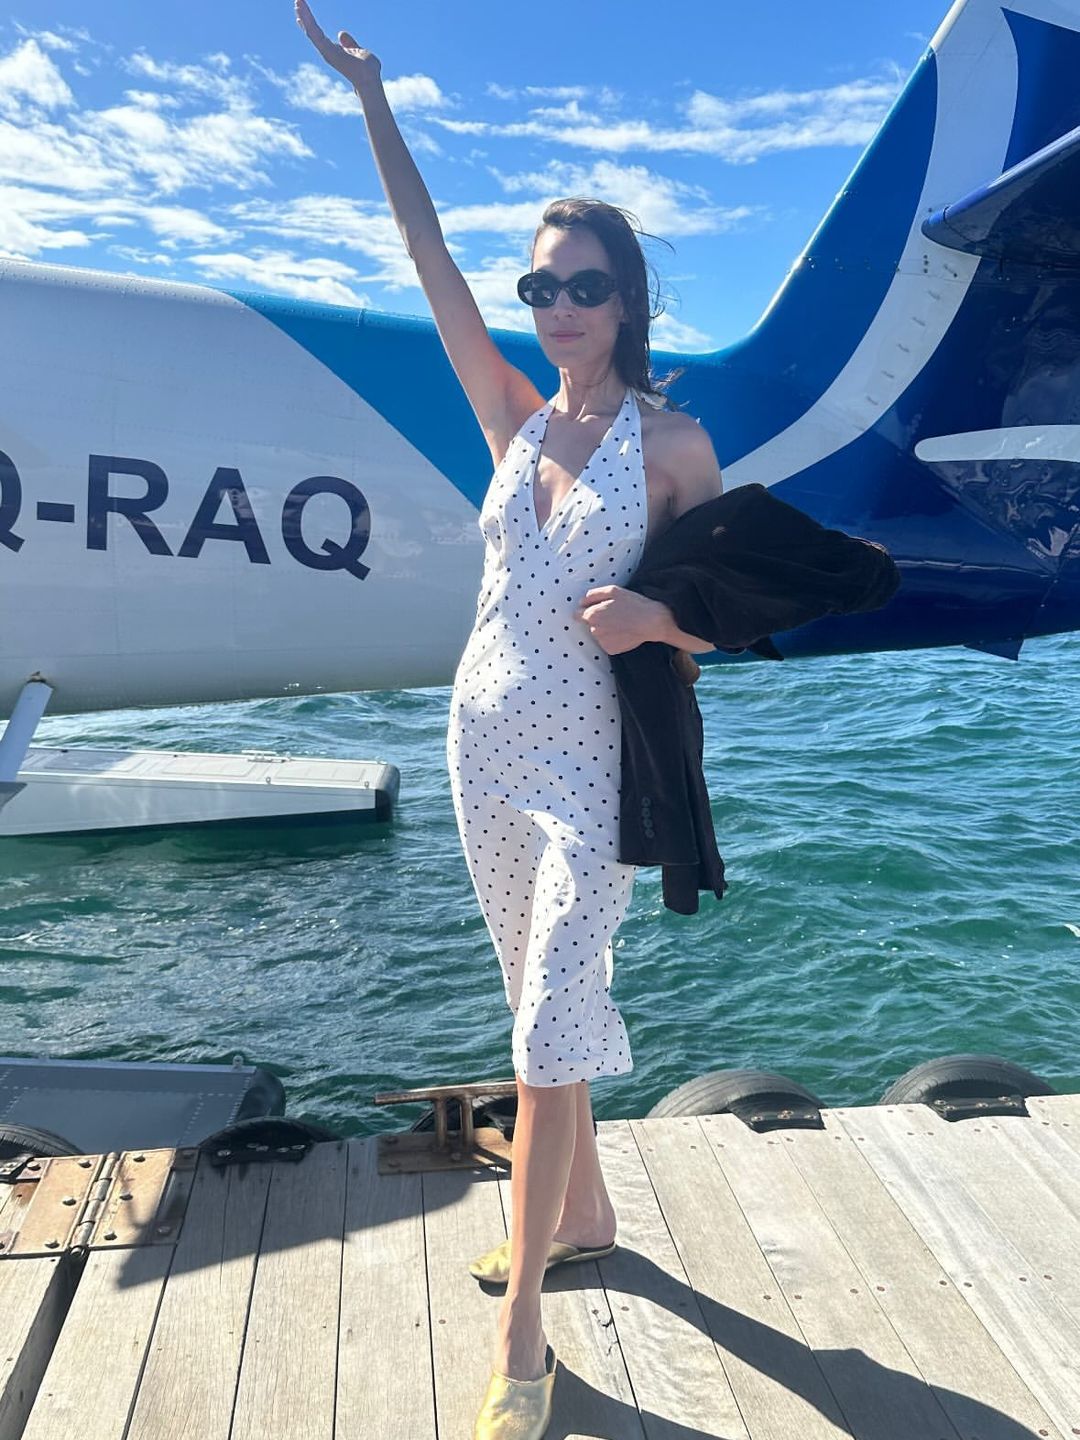 Alexa Chung poses in a polka dot dress while on holiday